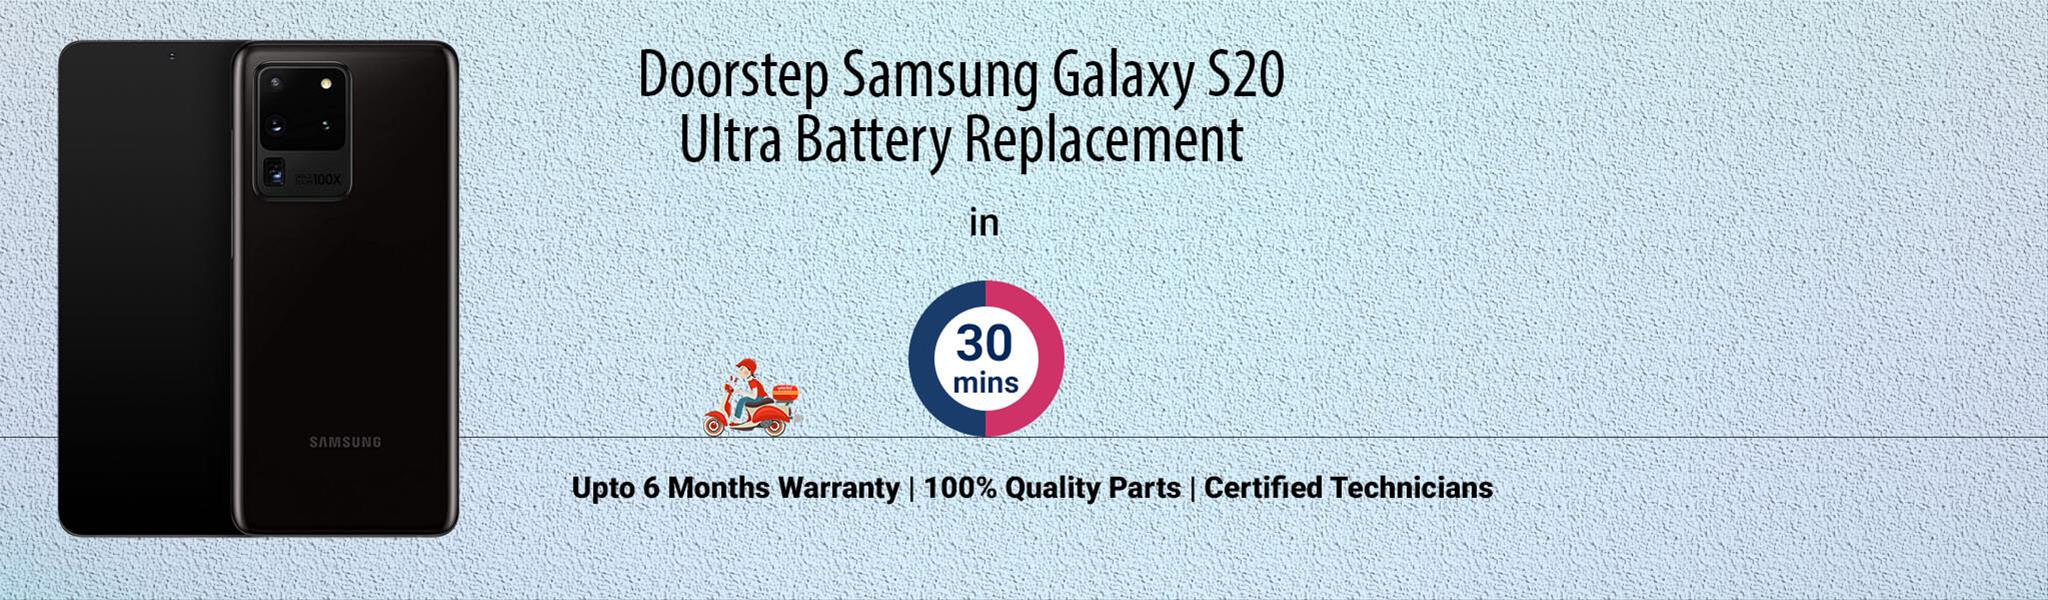 samsung-galaxy-s20-ultra-battery-replacement.jpg